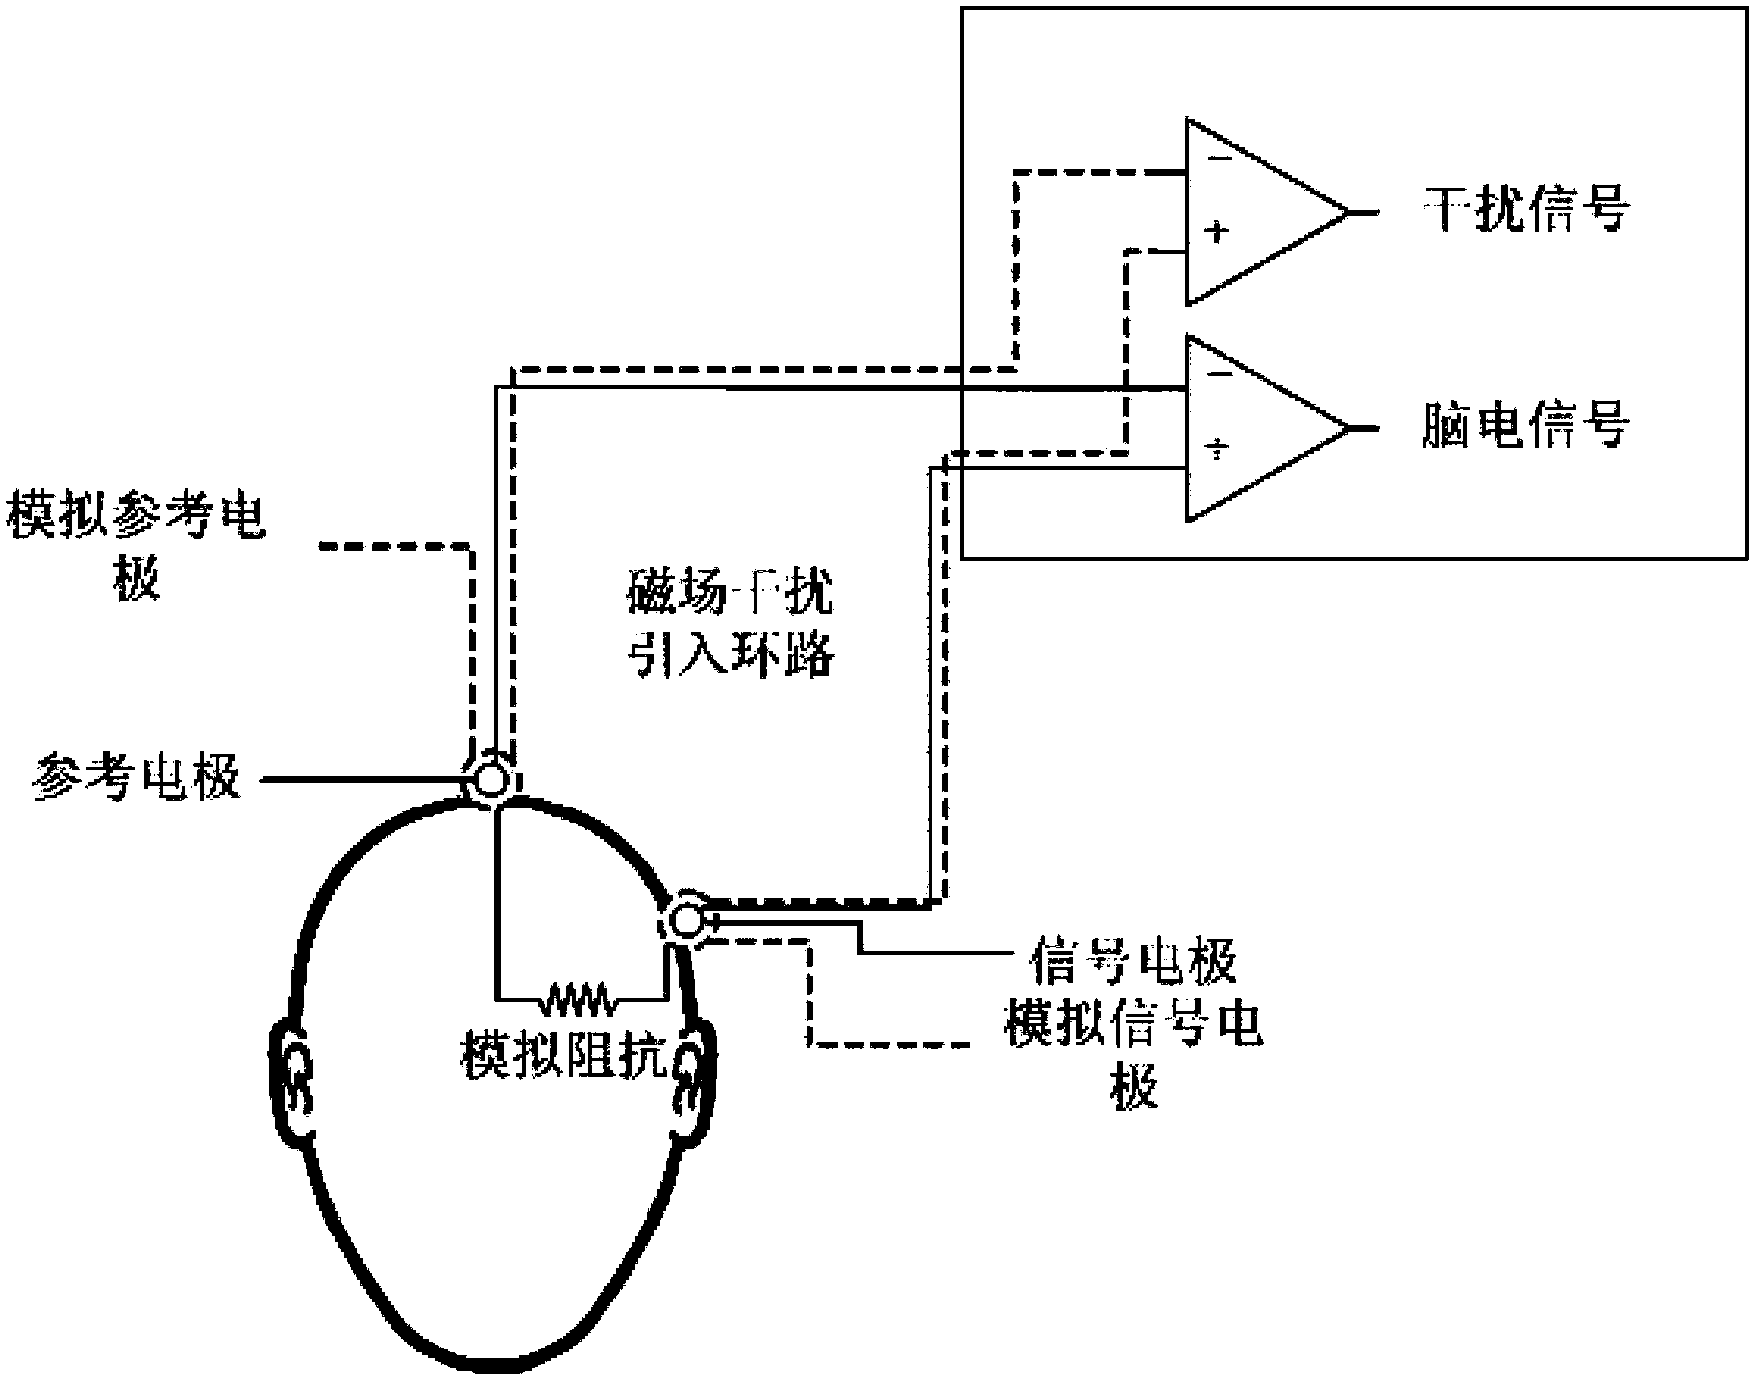 Method for processing electroencephalogram noise under nuclear magnetism